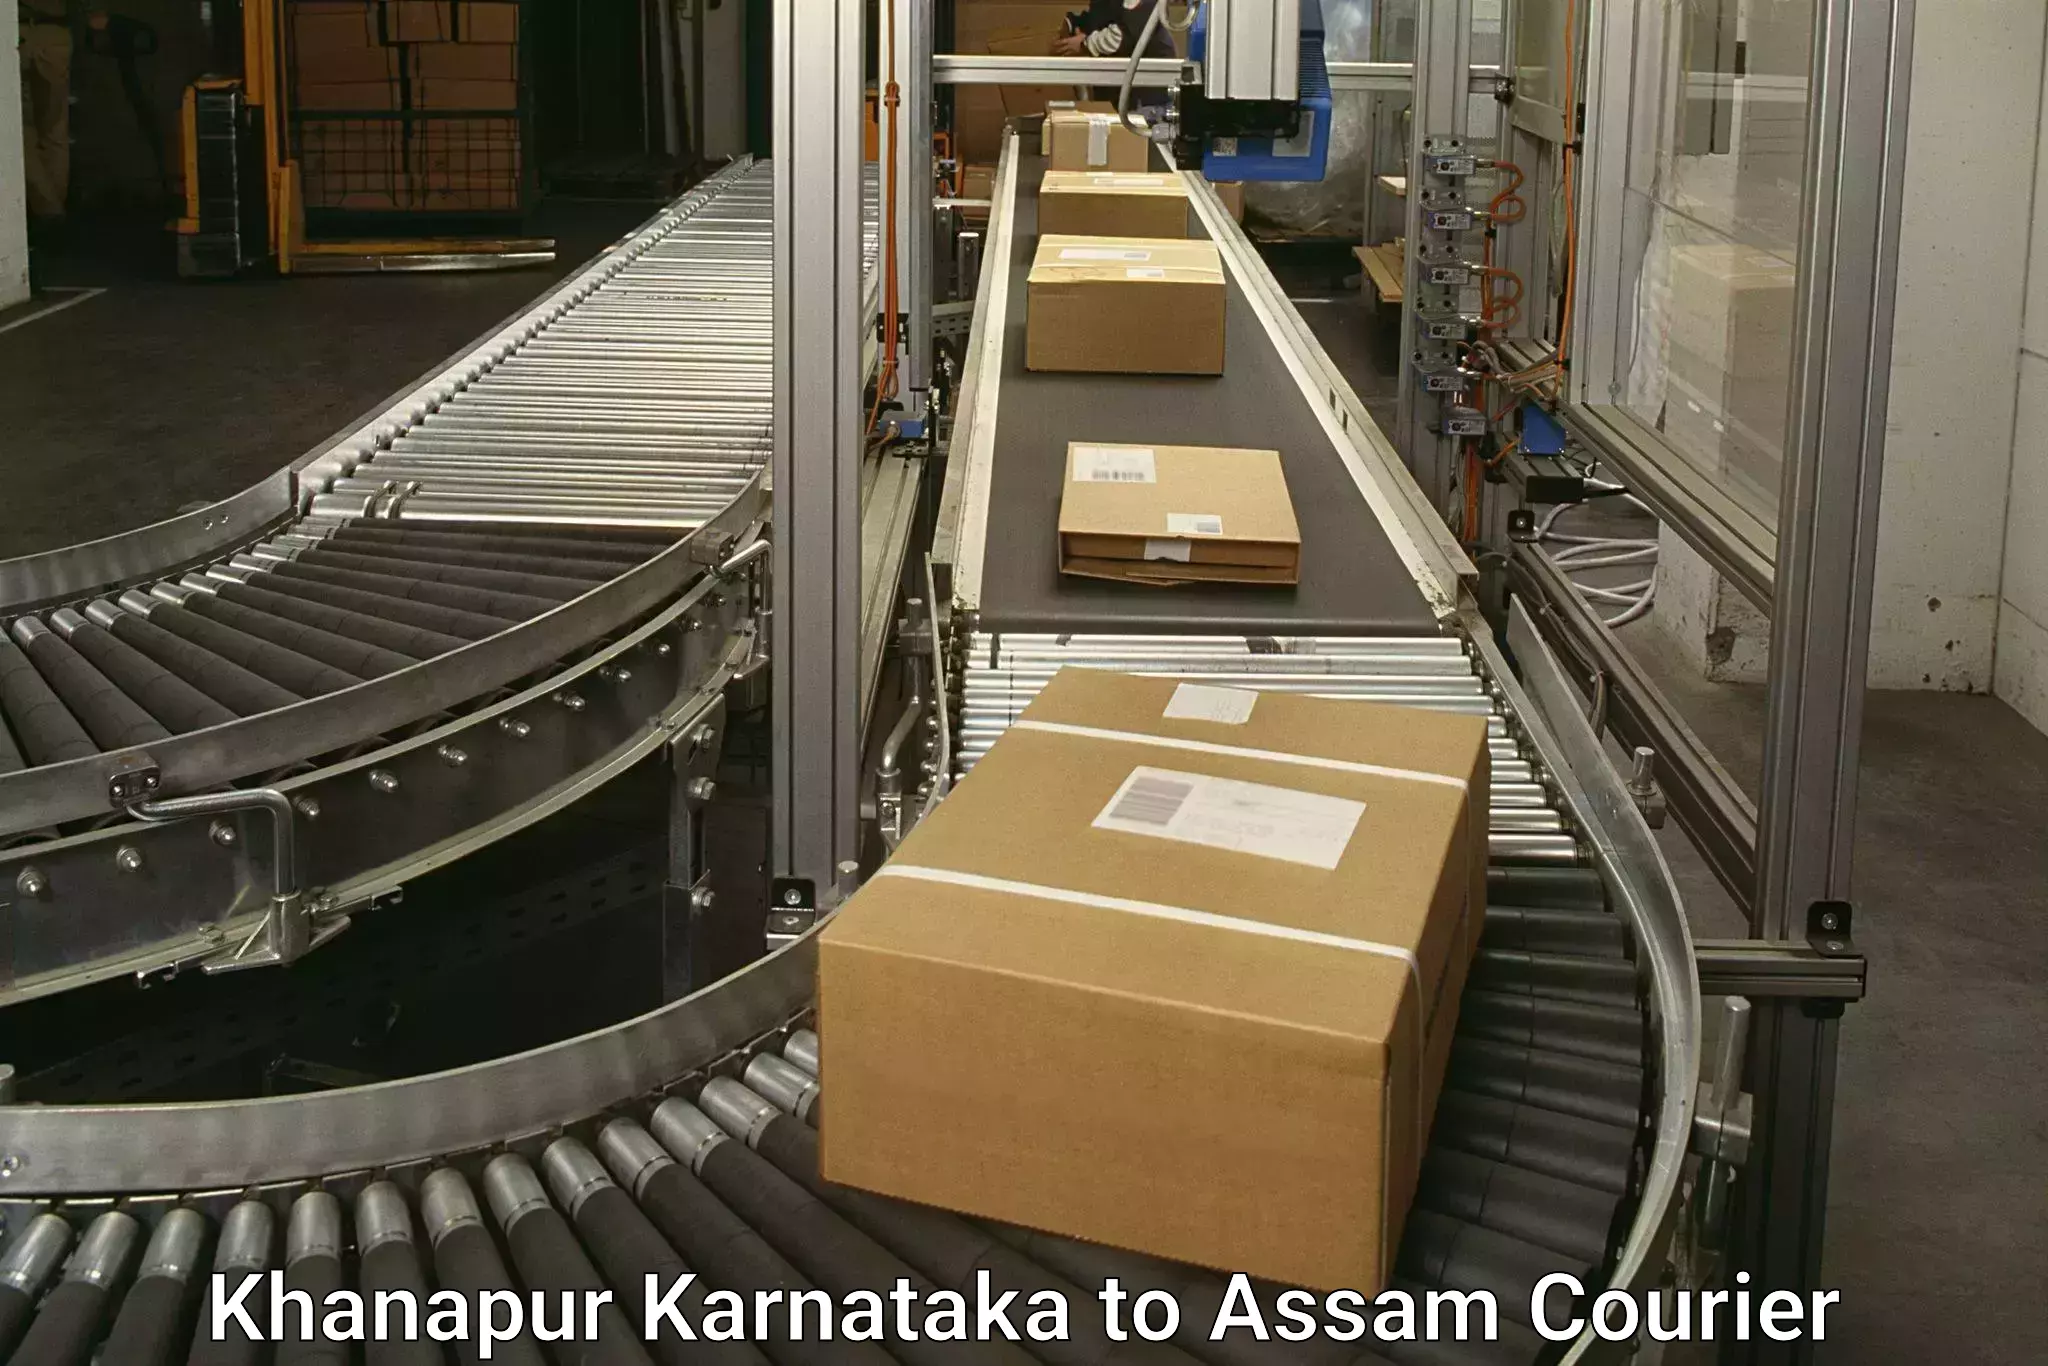 Express logistics providers Khanapur Karnataka to Assam